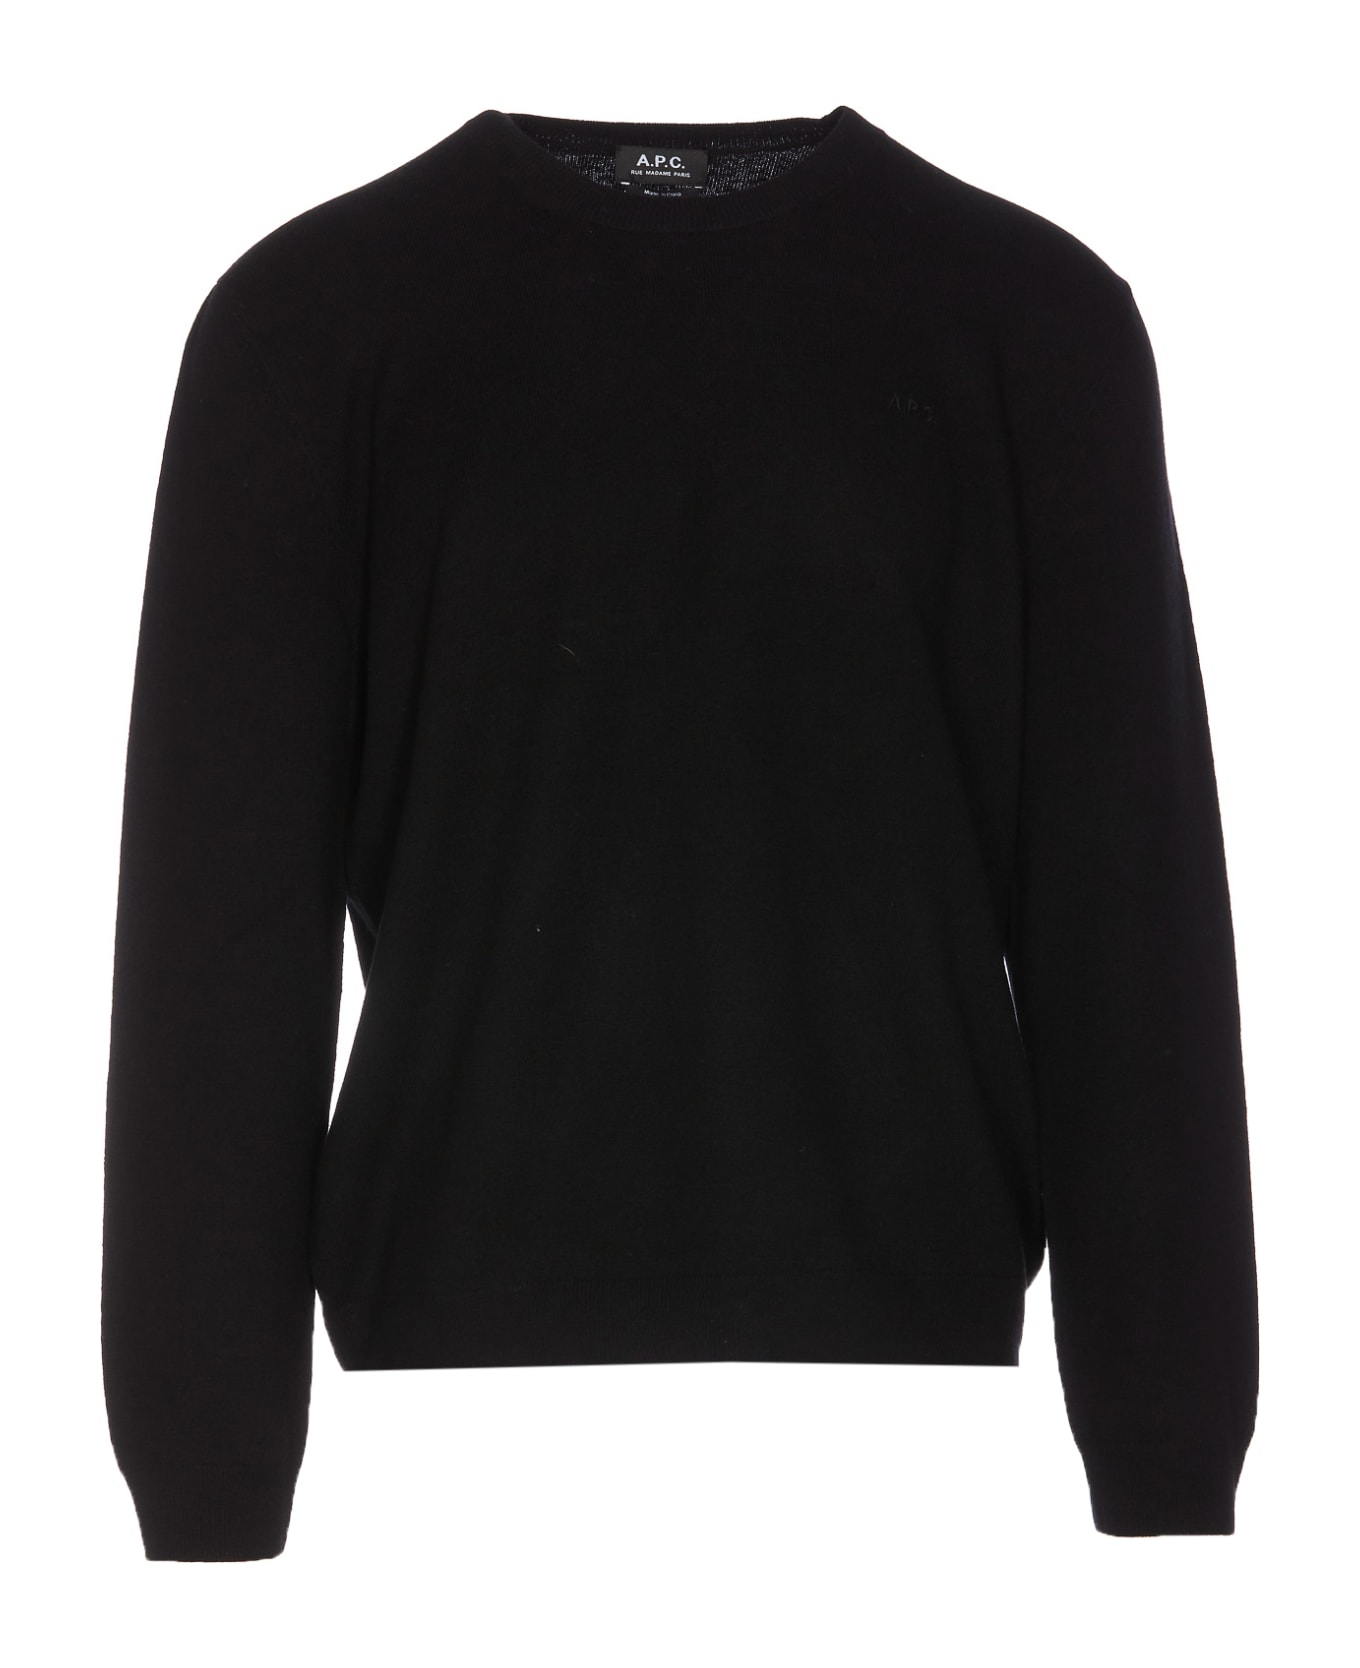 A.P.C. Sweater - Black ニットウェア